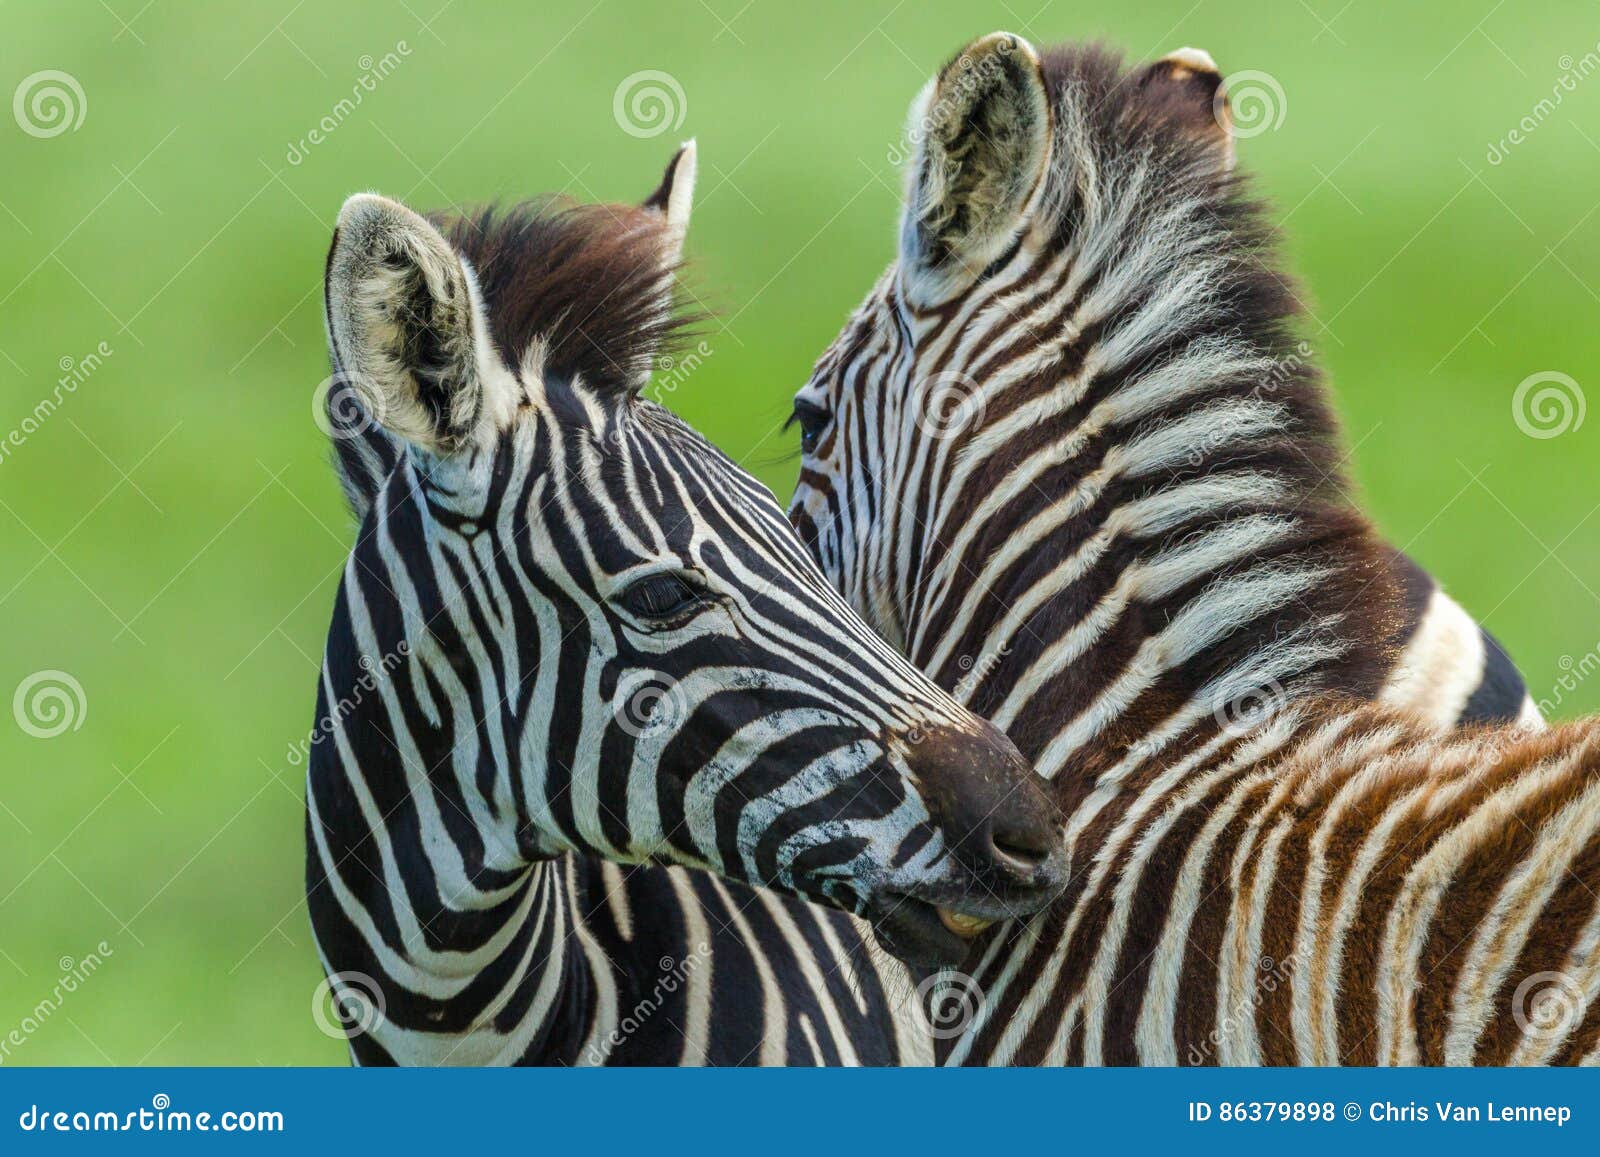 zebras calf necking affections wildlife